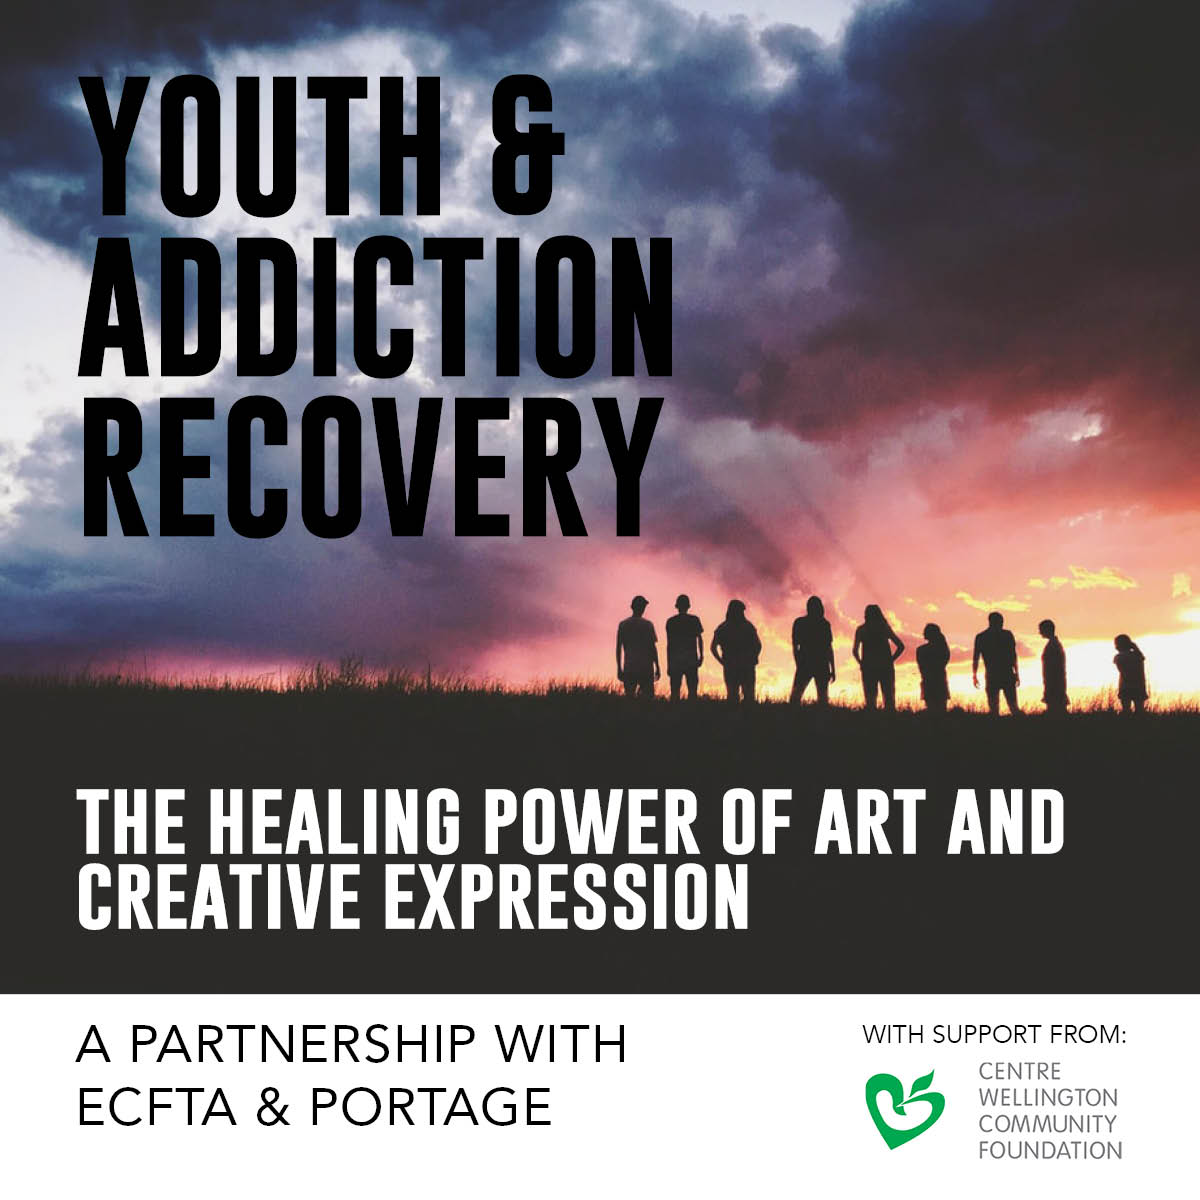 Overcoming addiction through creative expression